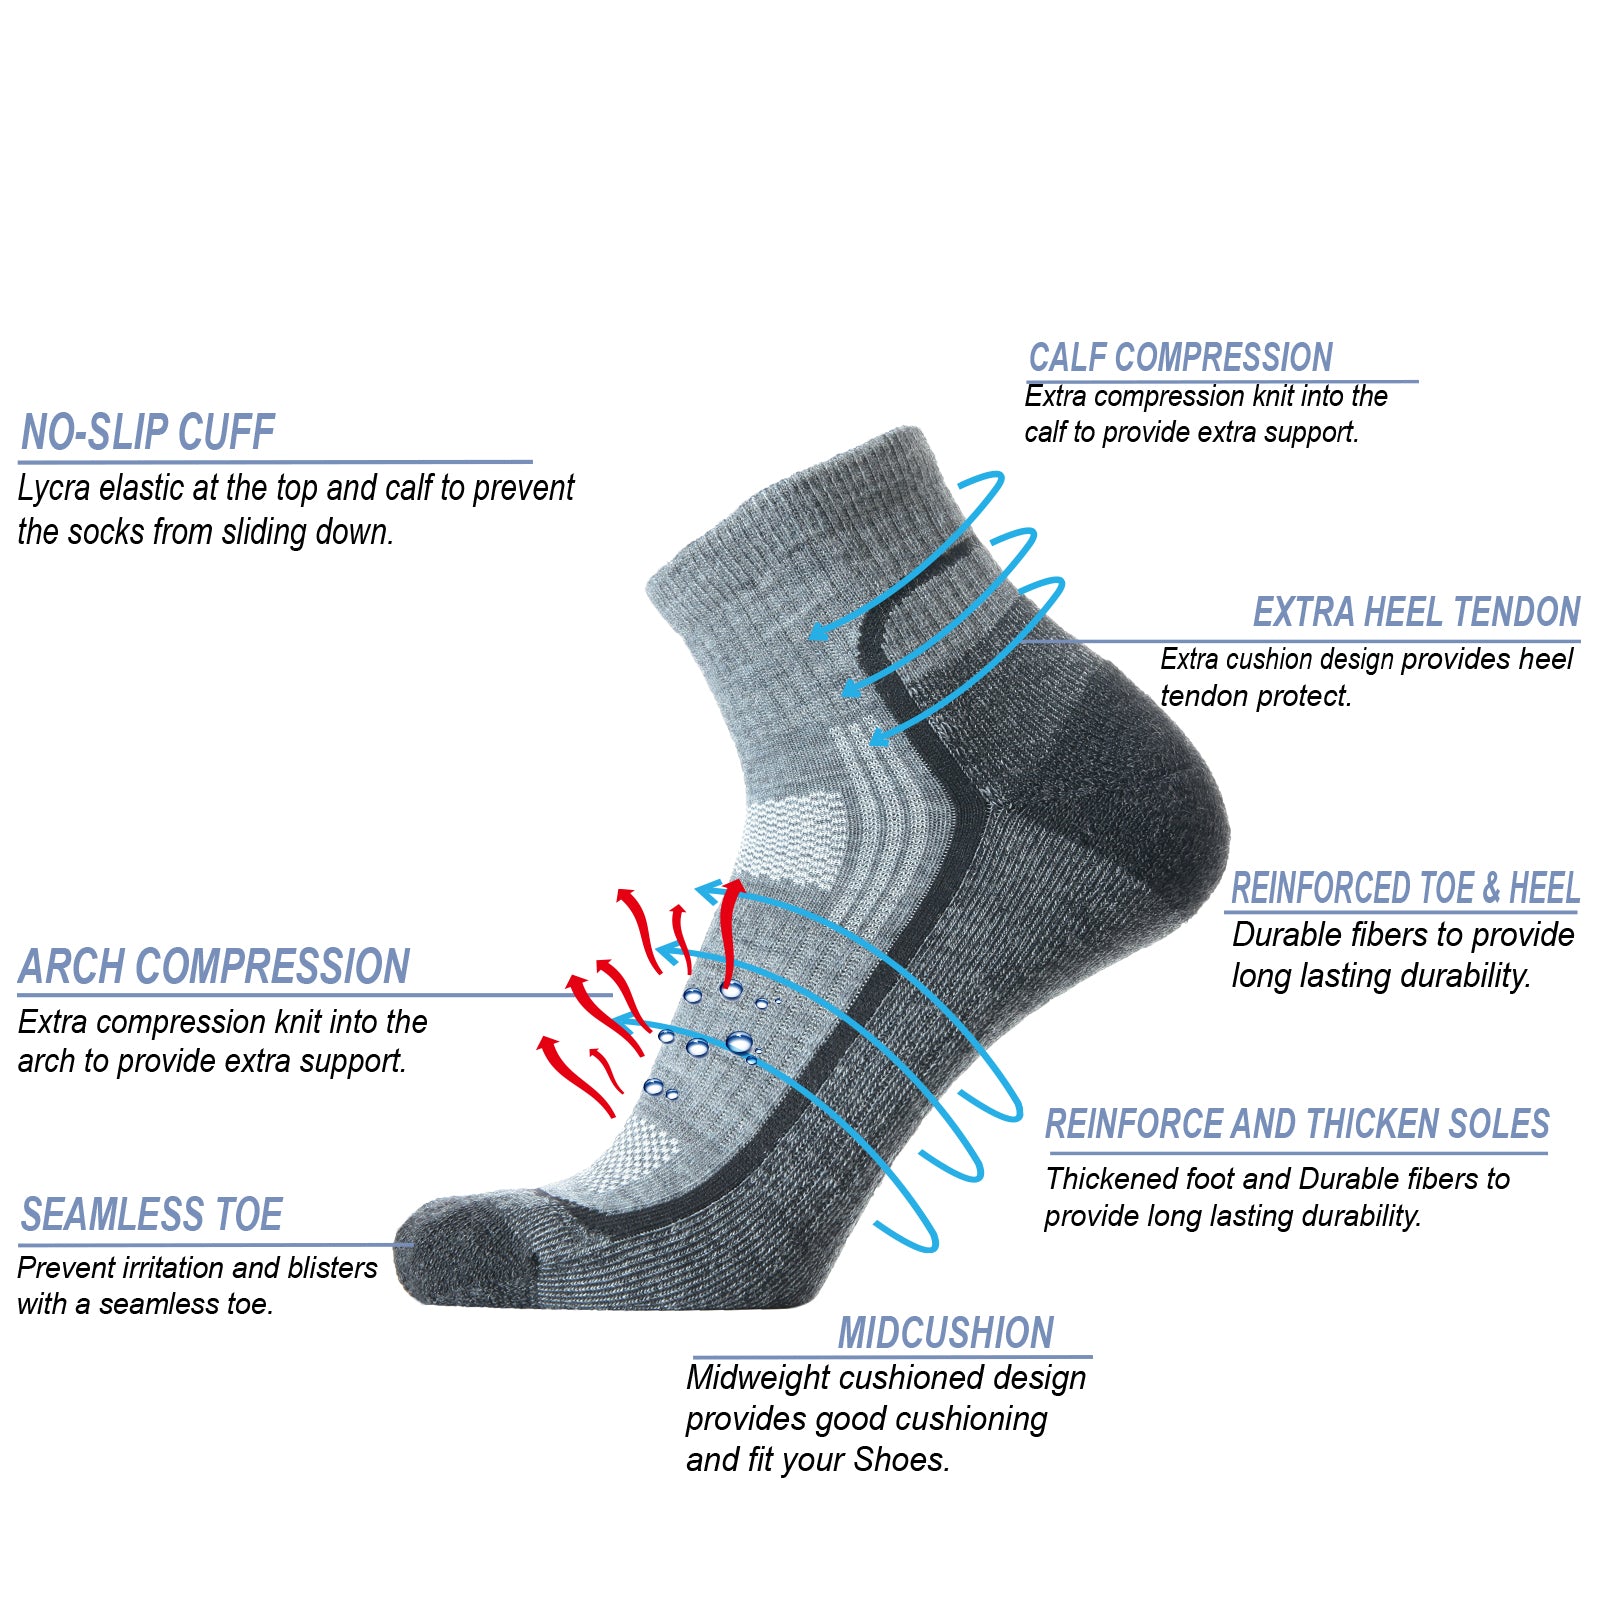 SOLAX 3 pairs Man's Merino wool Quarter socks